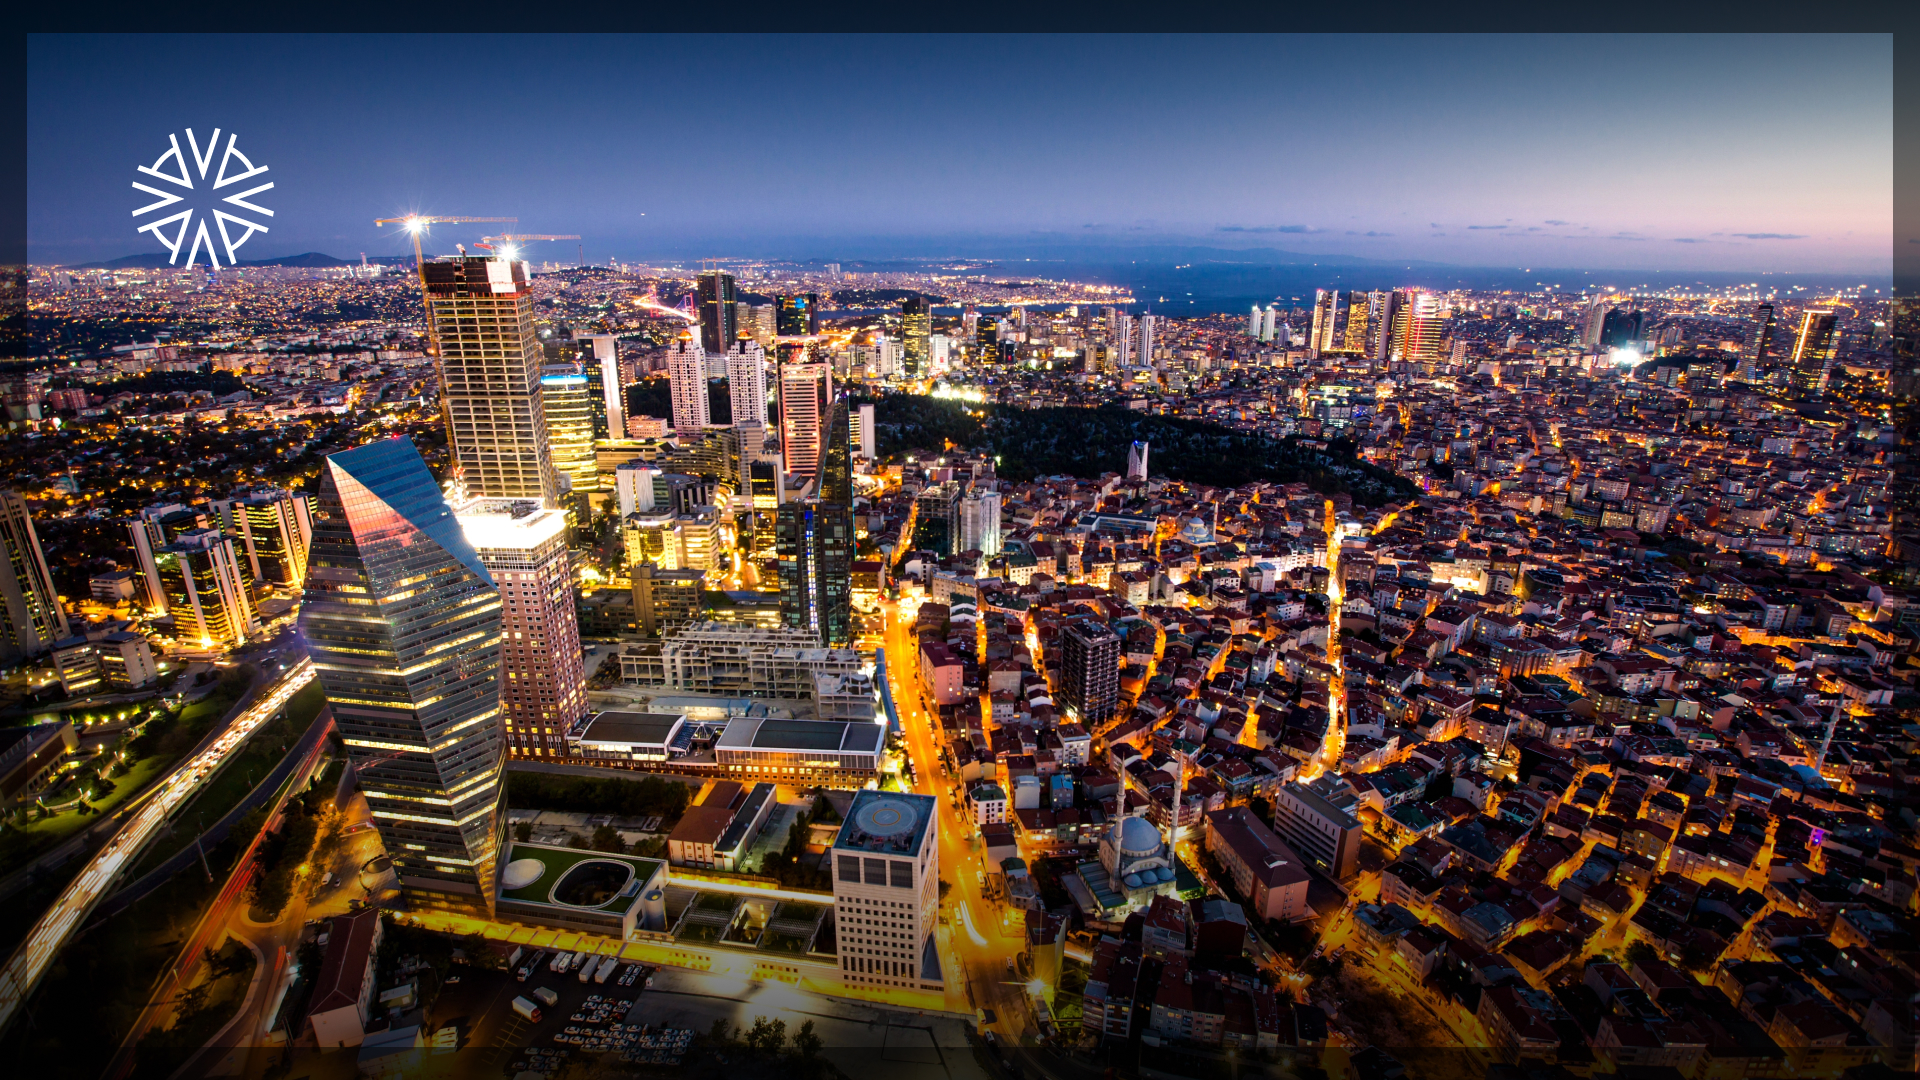 Istanbul Turkey luxury real estate market, aerial view